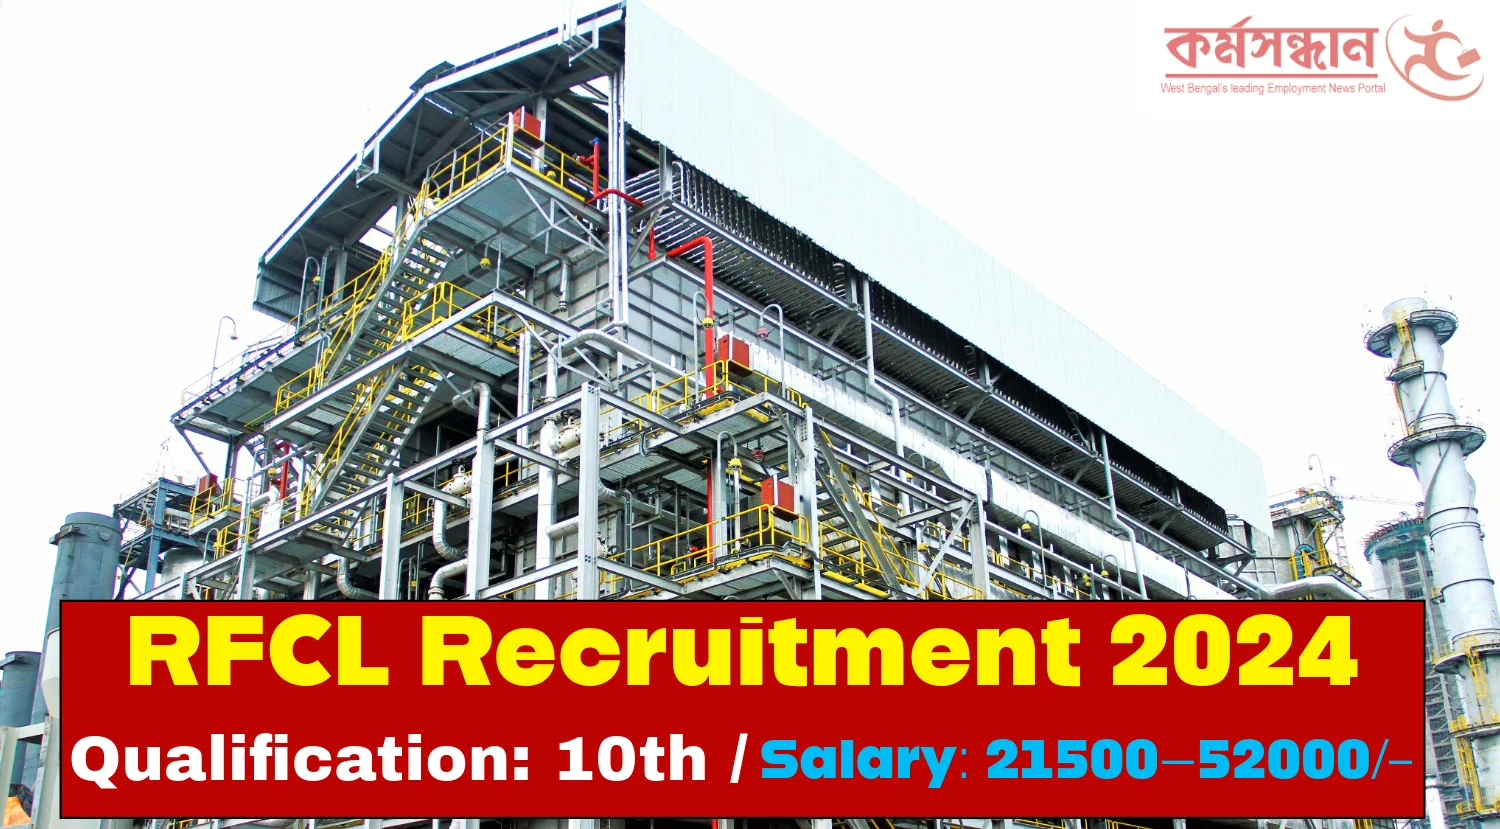 RFCL Recruitment 2024